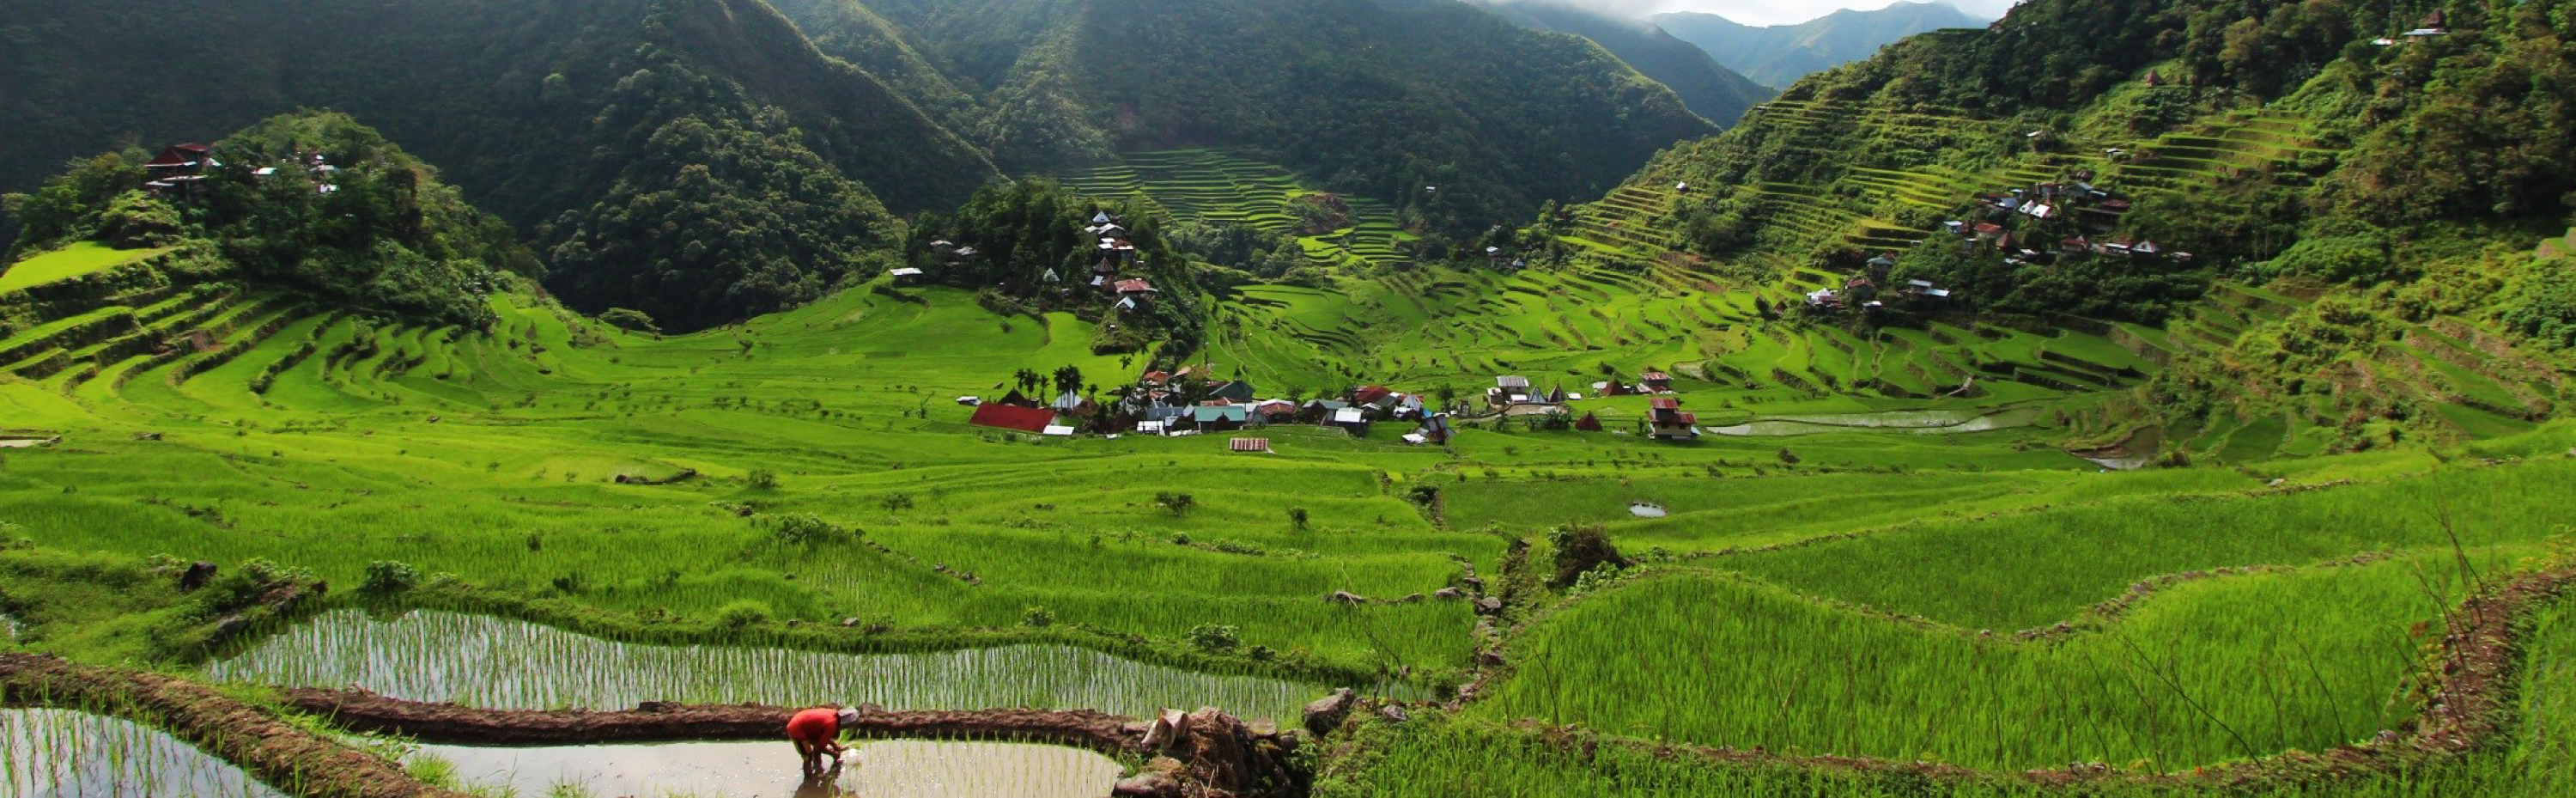 Rice terraces of Batad